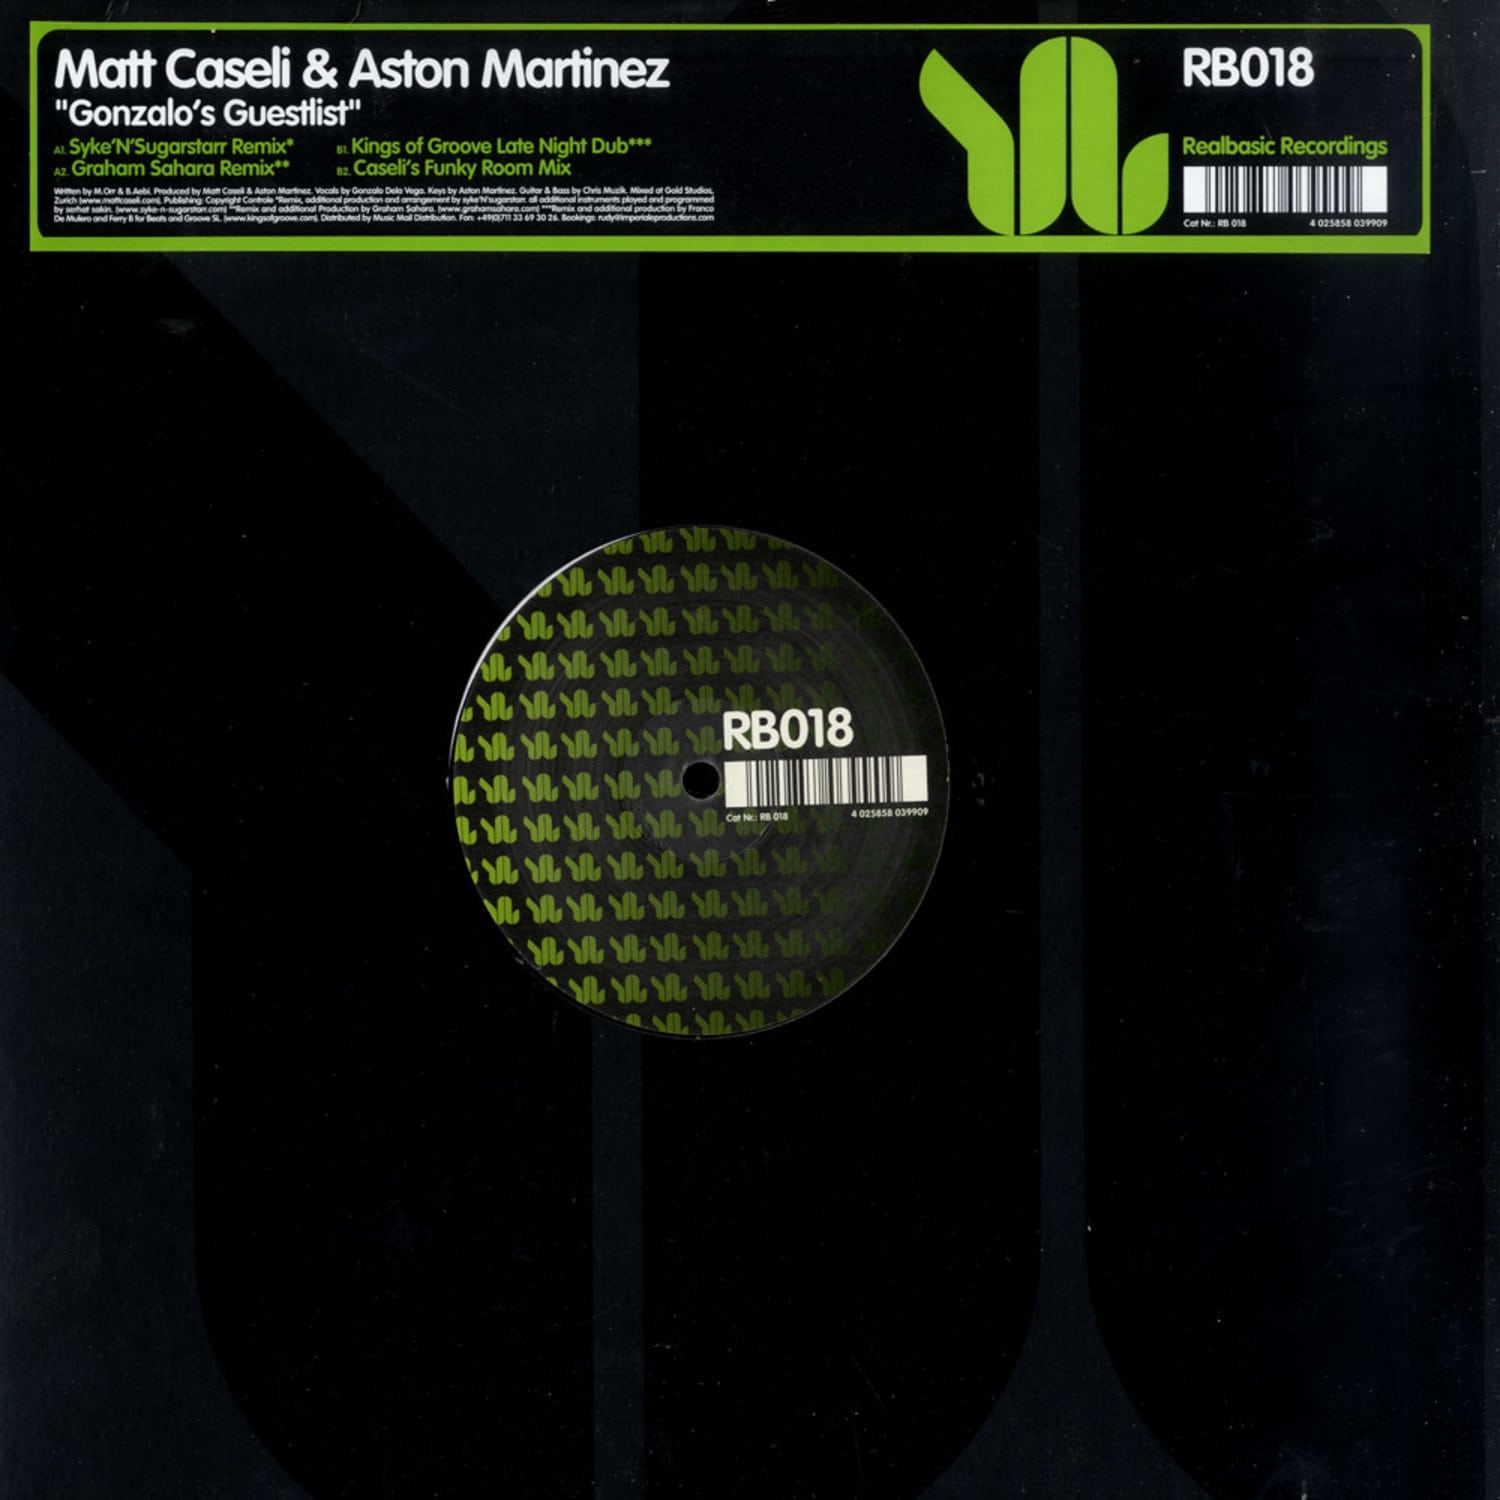 Matt Caseli & Aston Martinez - GONZALOS GUESTLIST